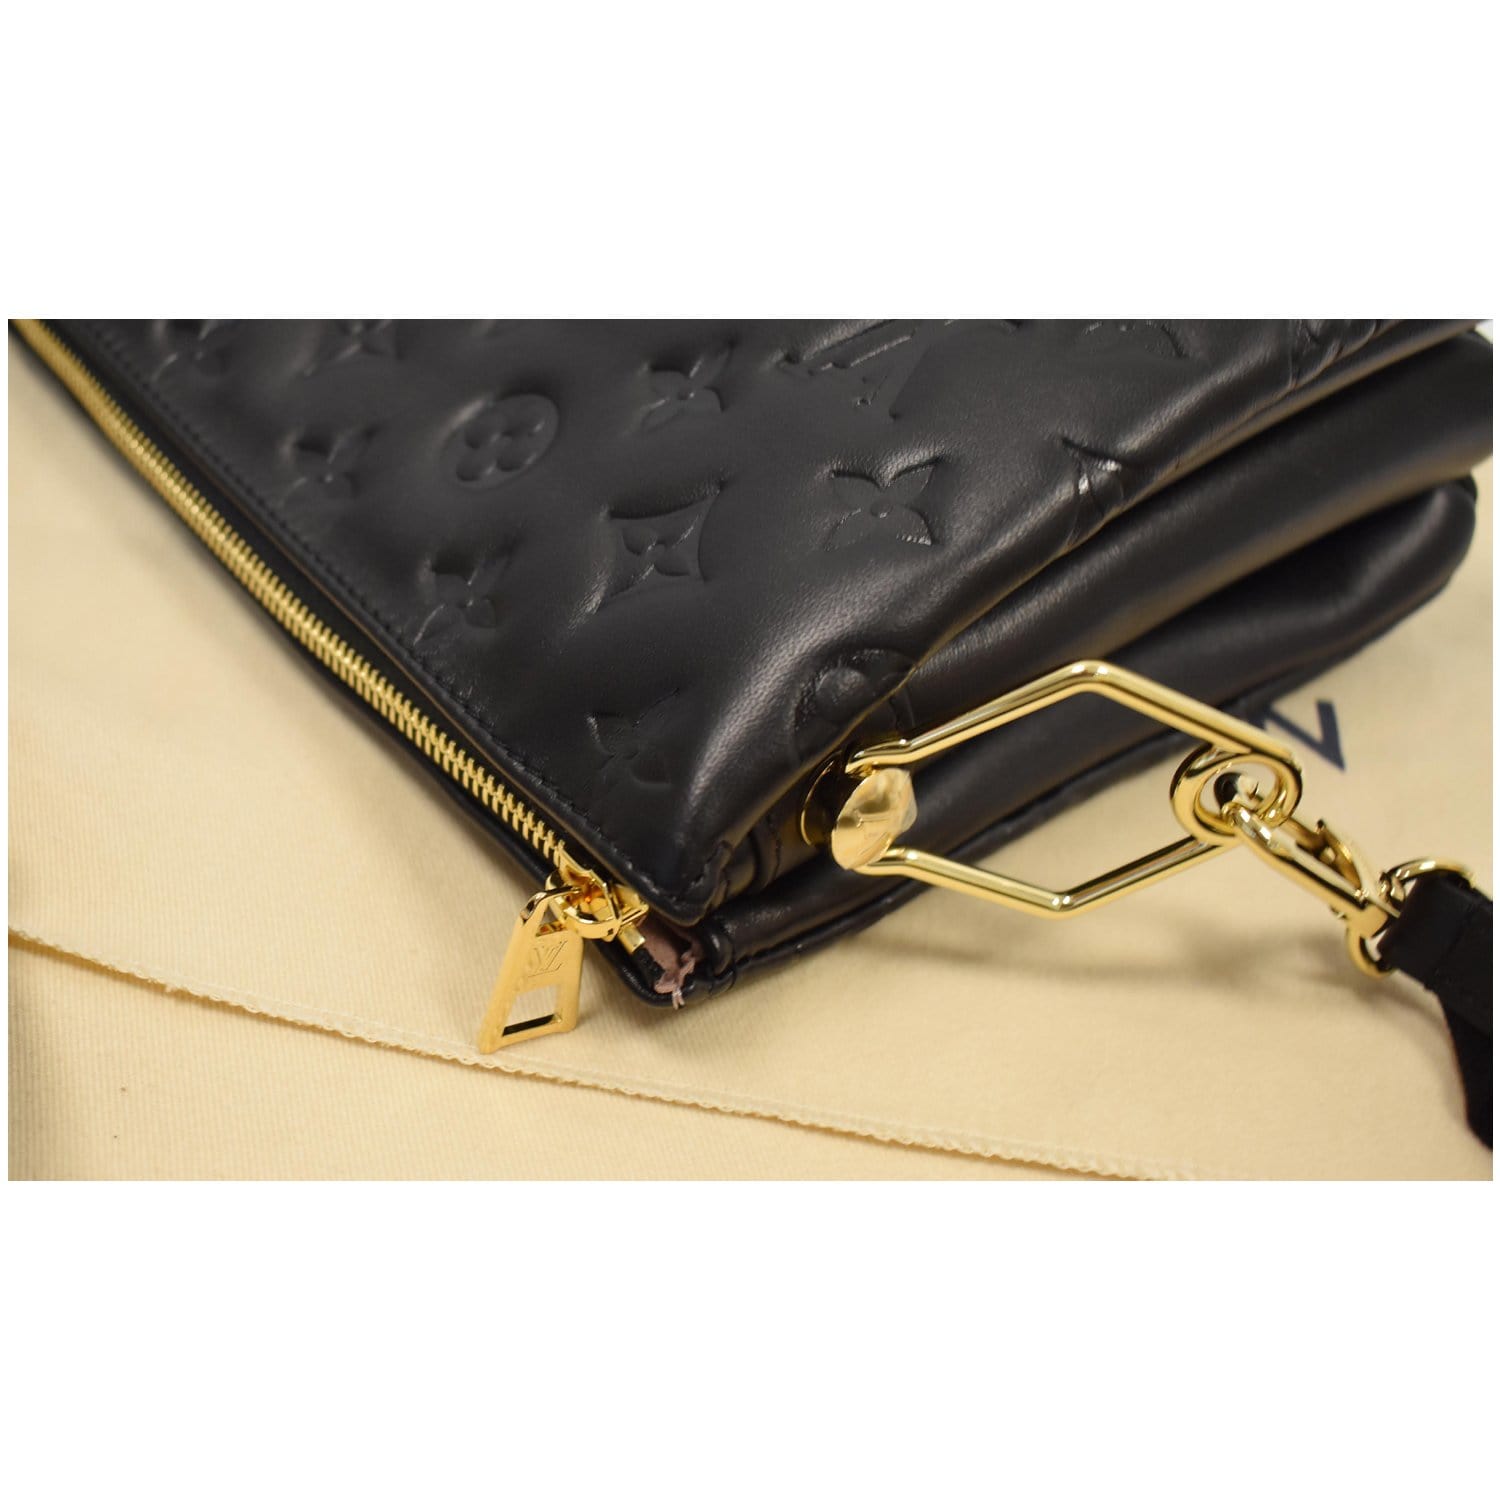 Louis Vuitton Coussin PM Handbag Yellow Monogram Embossed Puffed